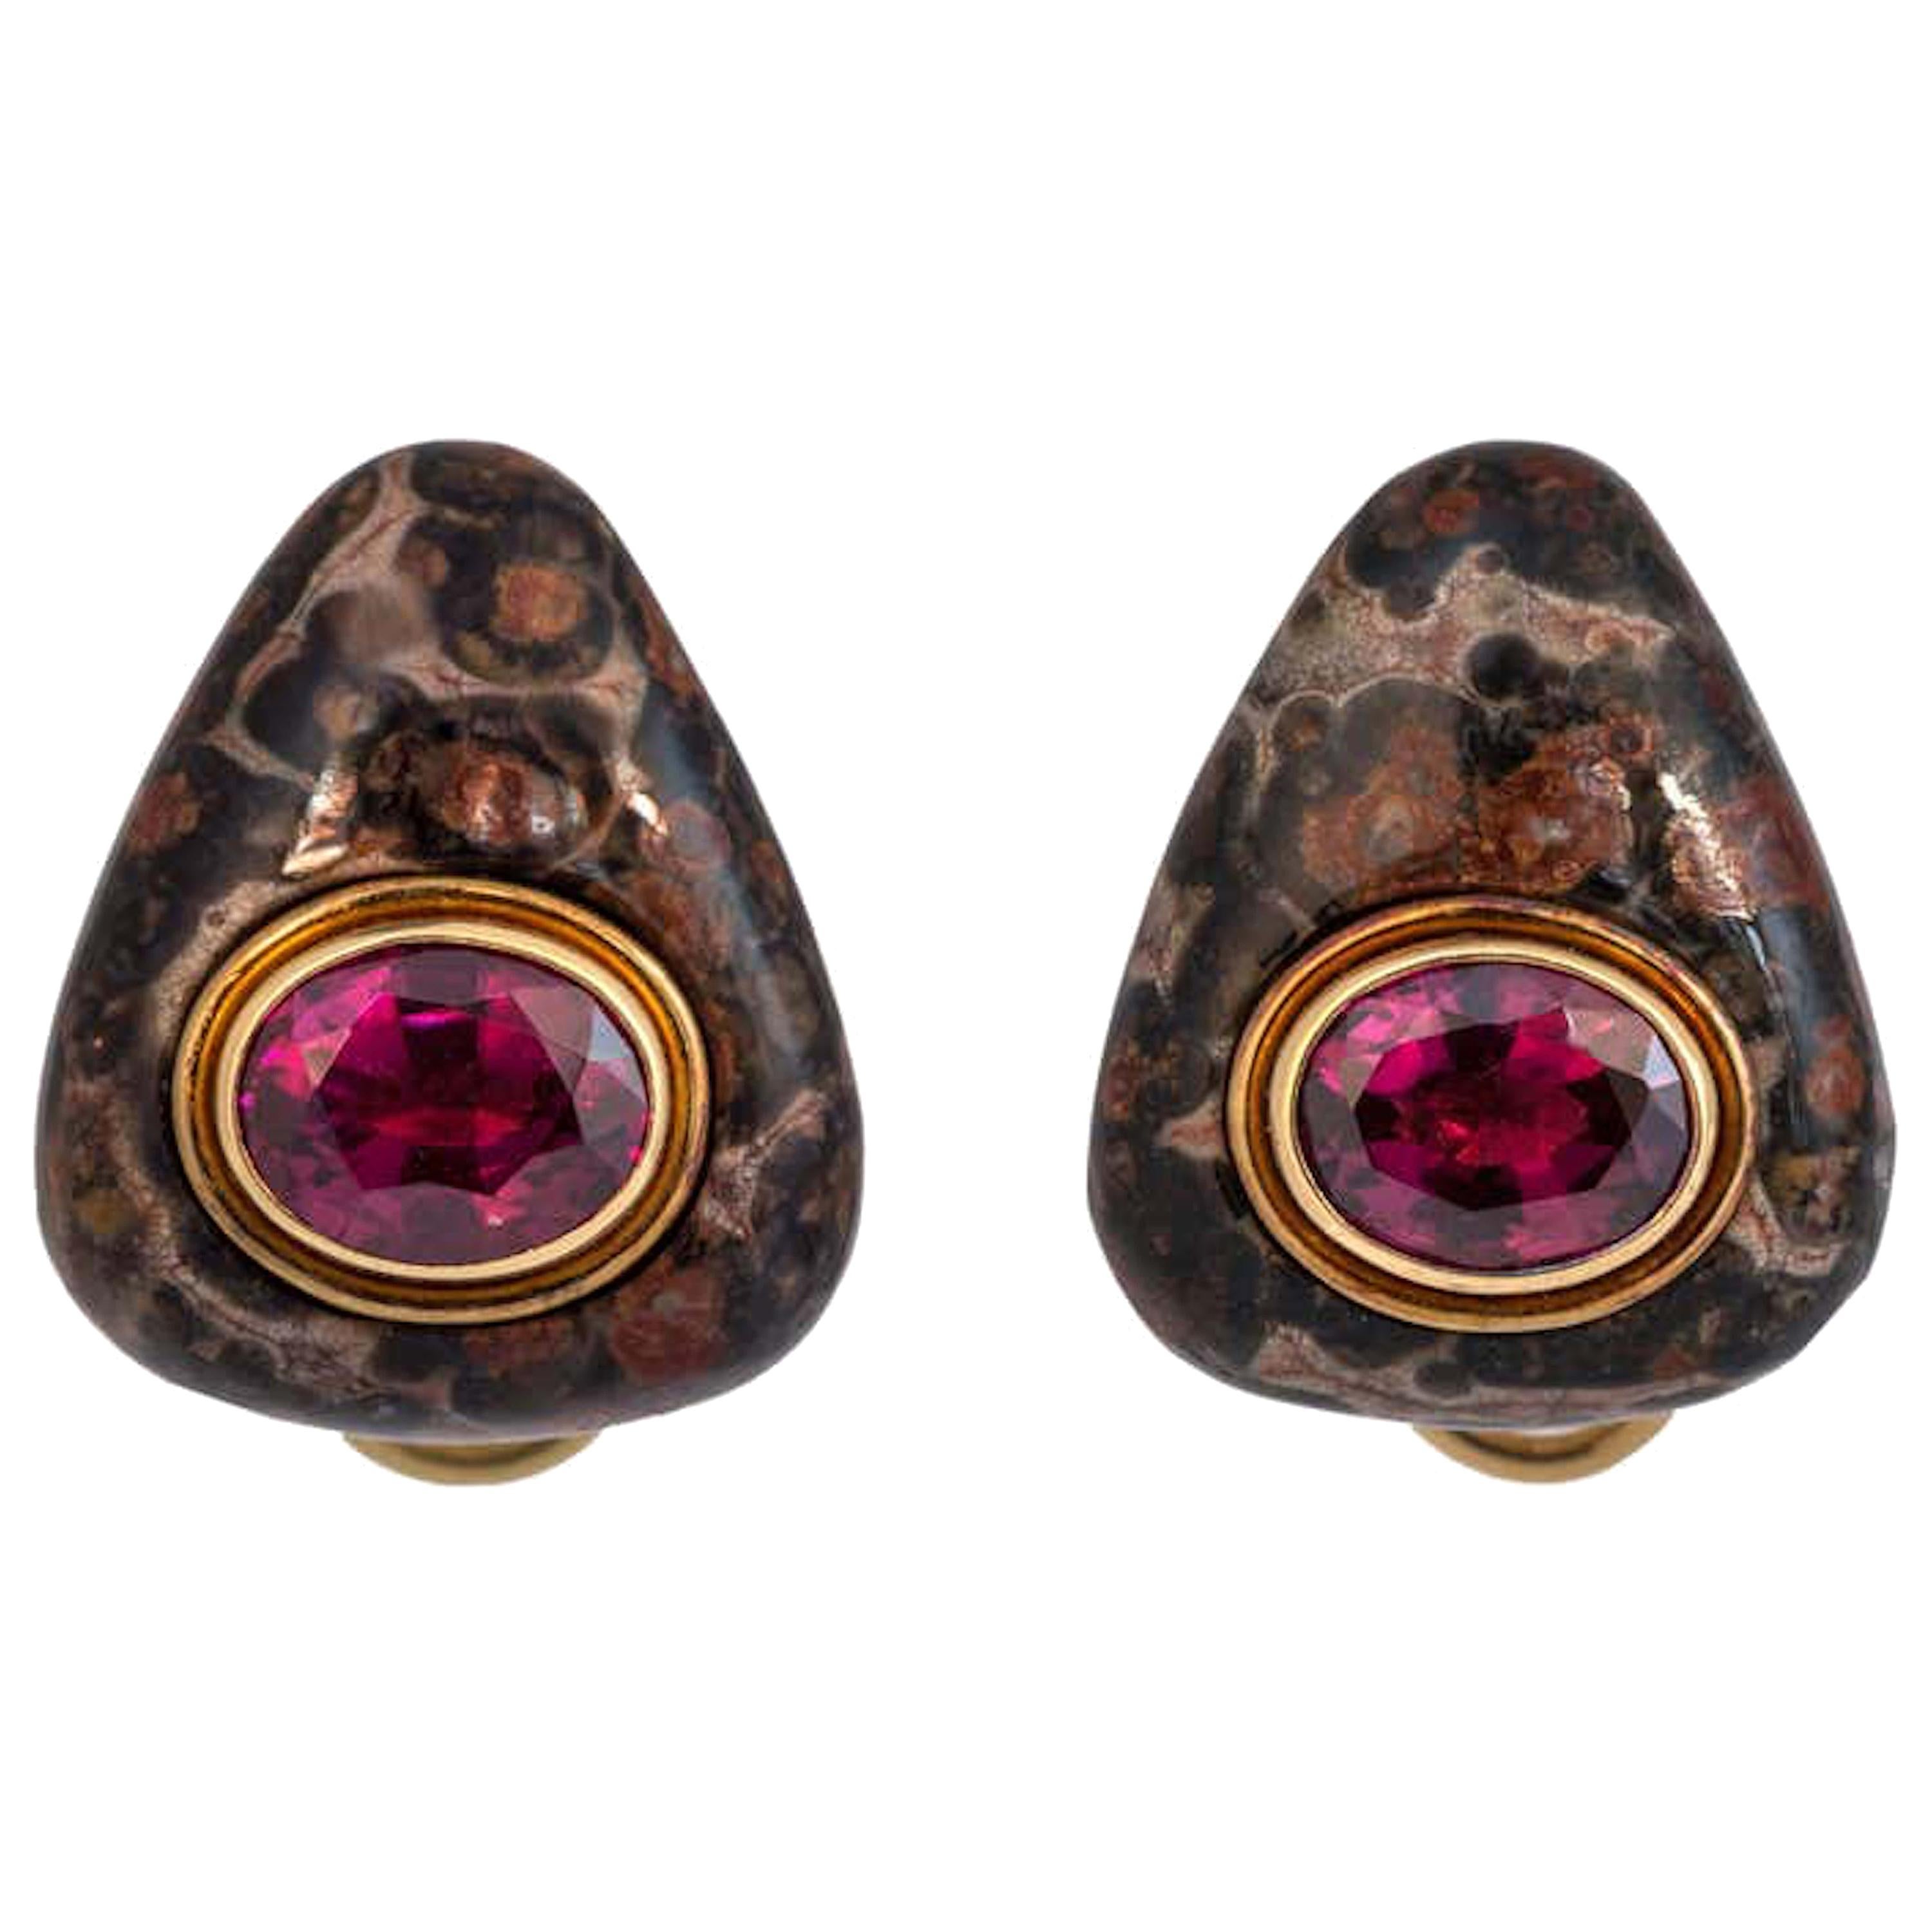 Pink Garnet and Jasper 18 Karat Earrings by Deakin and Francis, Made in England